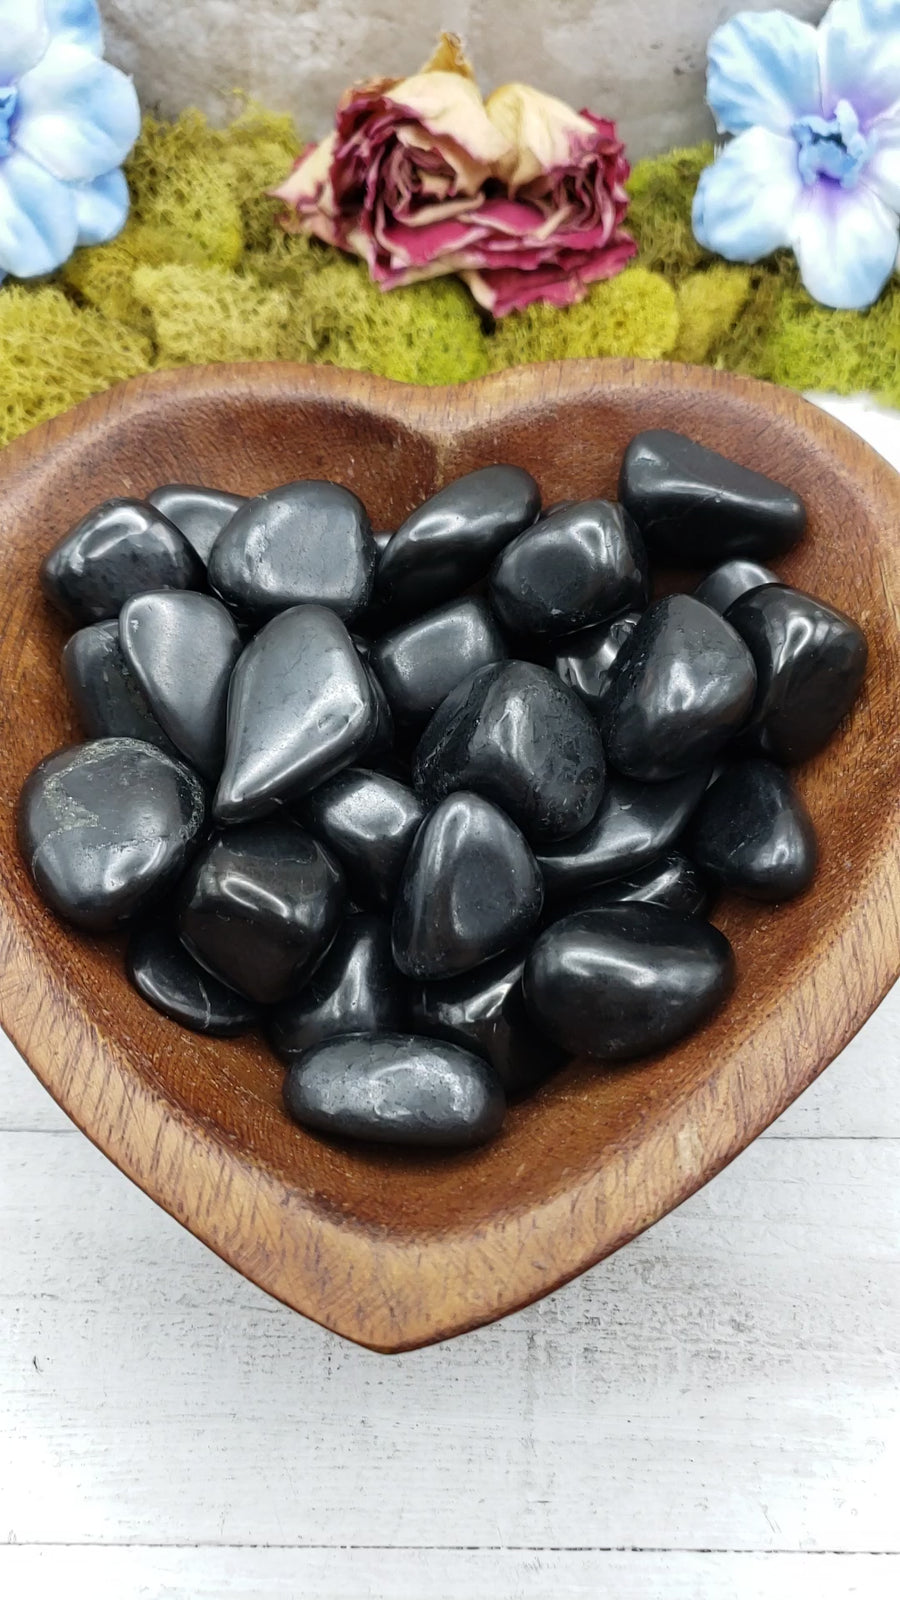 shungite stones in heart-shaped bowl